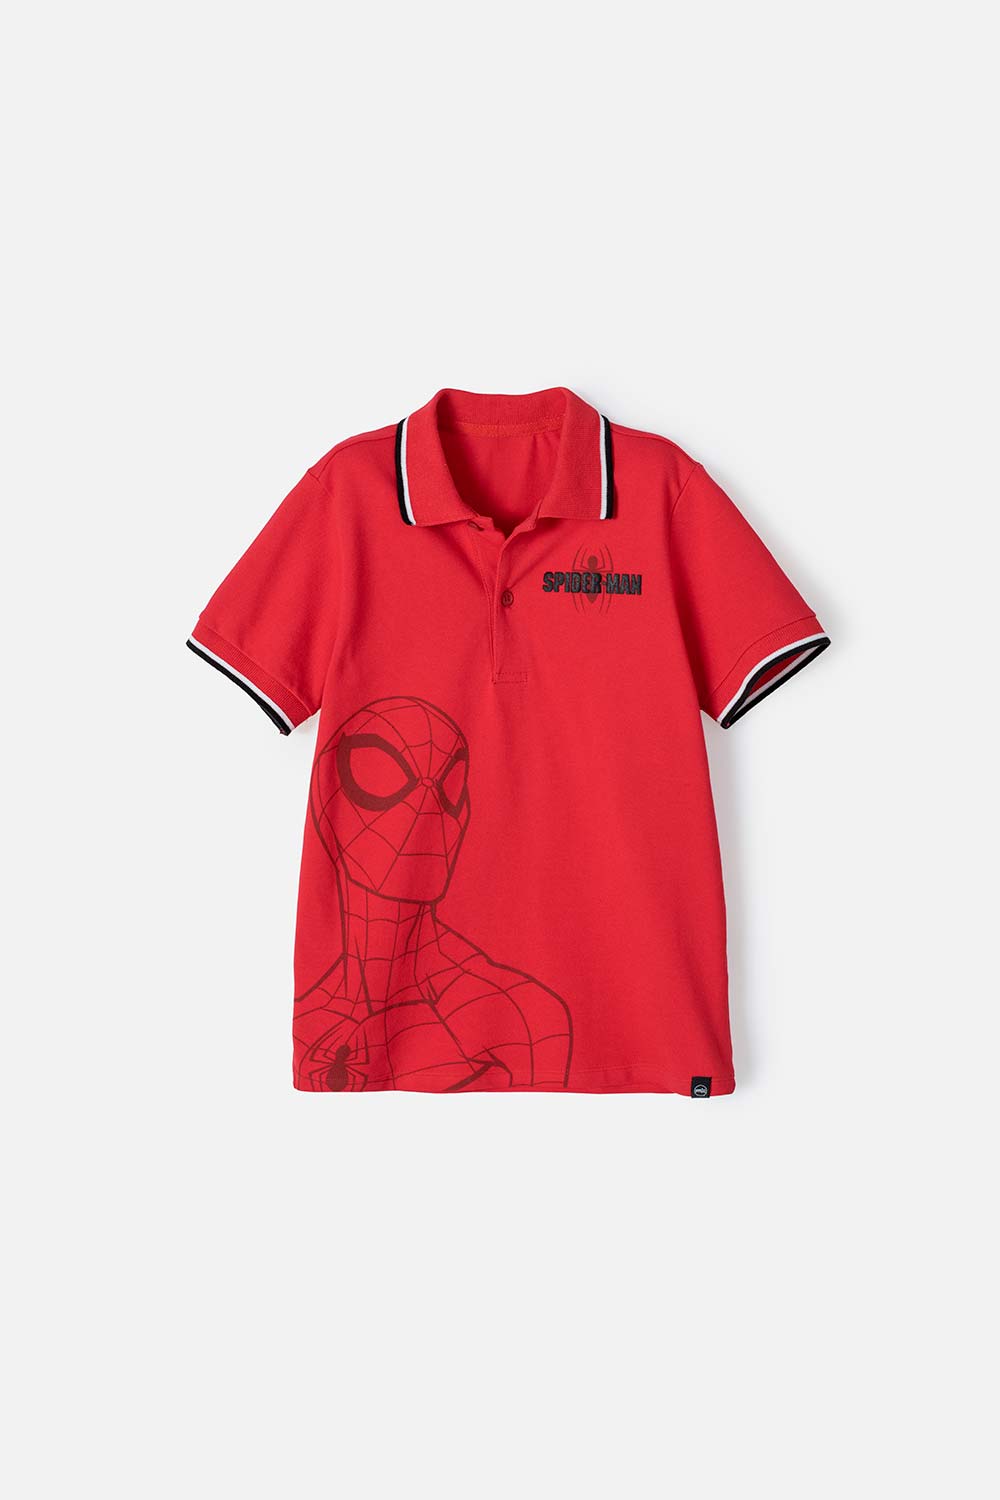 Camiseta tipo polo de Spiderman manga corta roja para niño 4-0